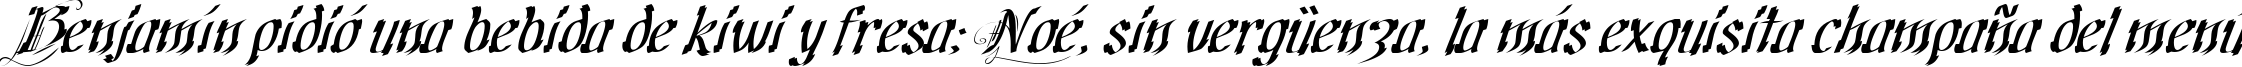 Пример написания шрифтом Cretino текста на испанском